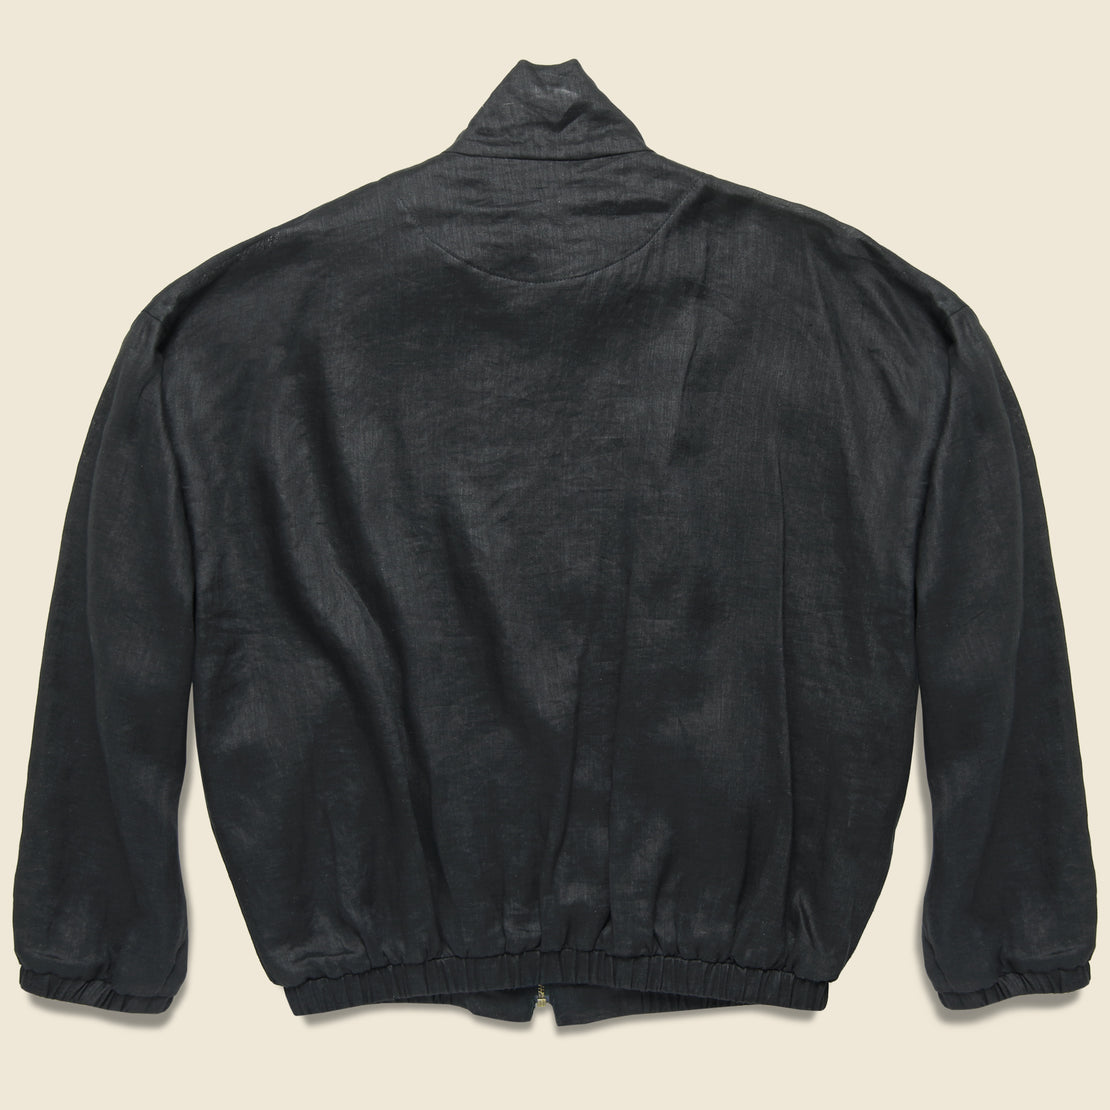 Old Dog Linen Blouson Jacket - Black - Monitaly - STAG Provisions - W - Outerwear - Coat/Jacket